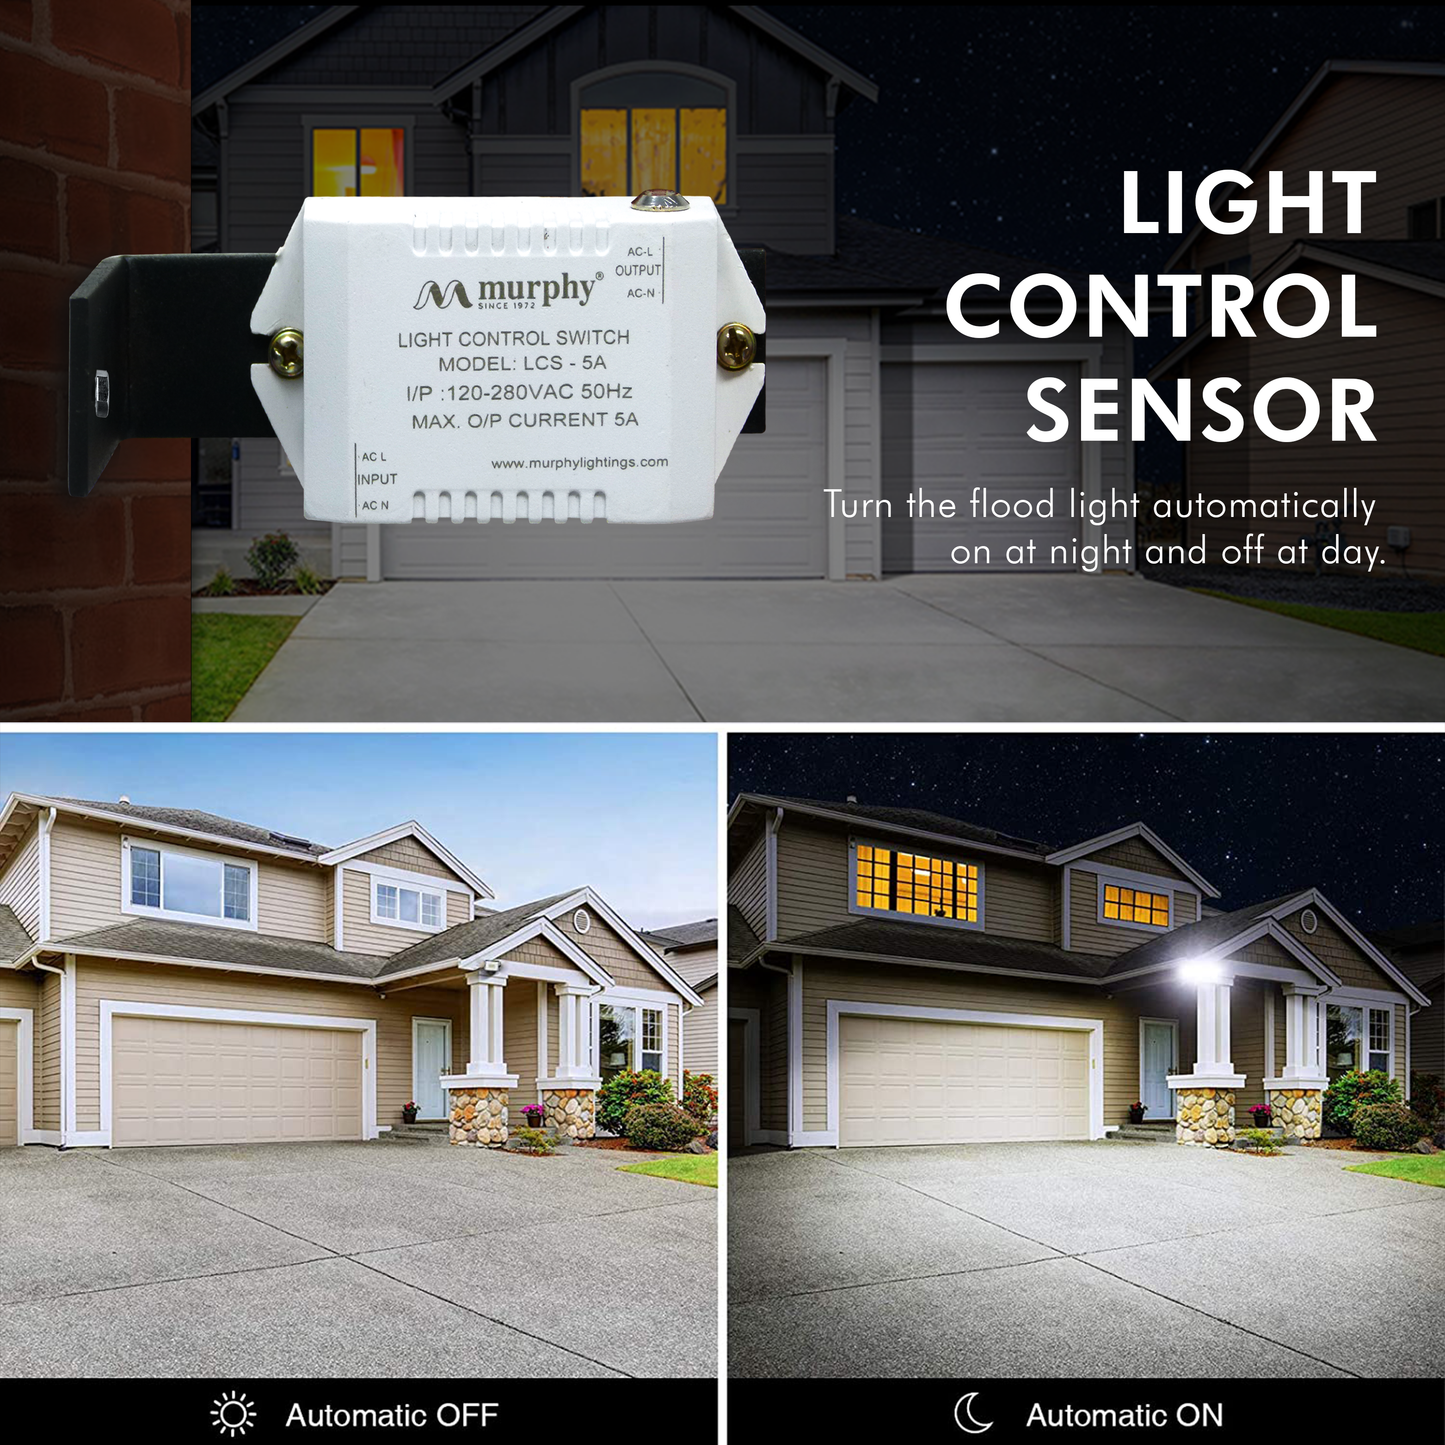 Murphy LED 200W OptiX Flood Light With Auto On/Off Day Night Light Sensor